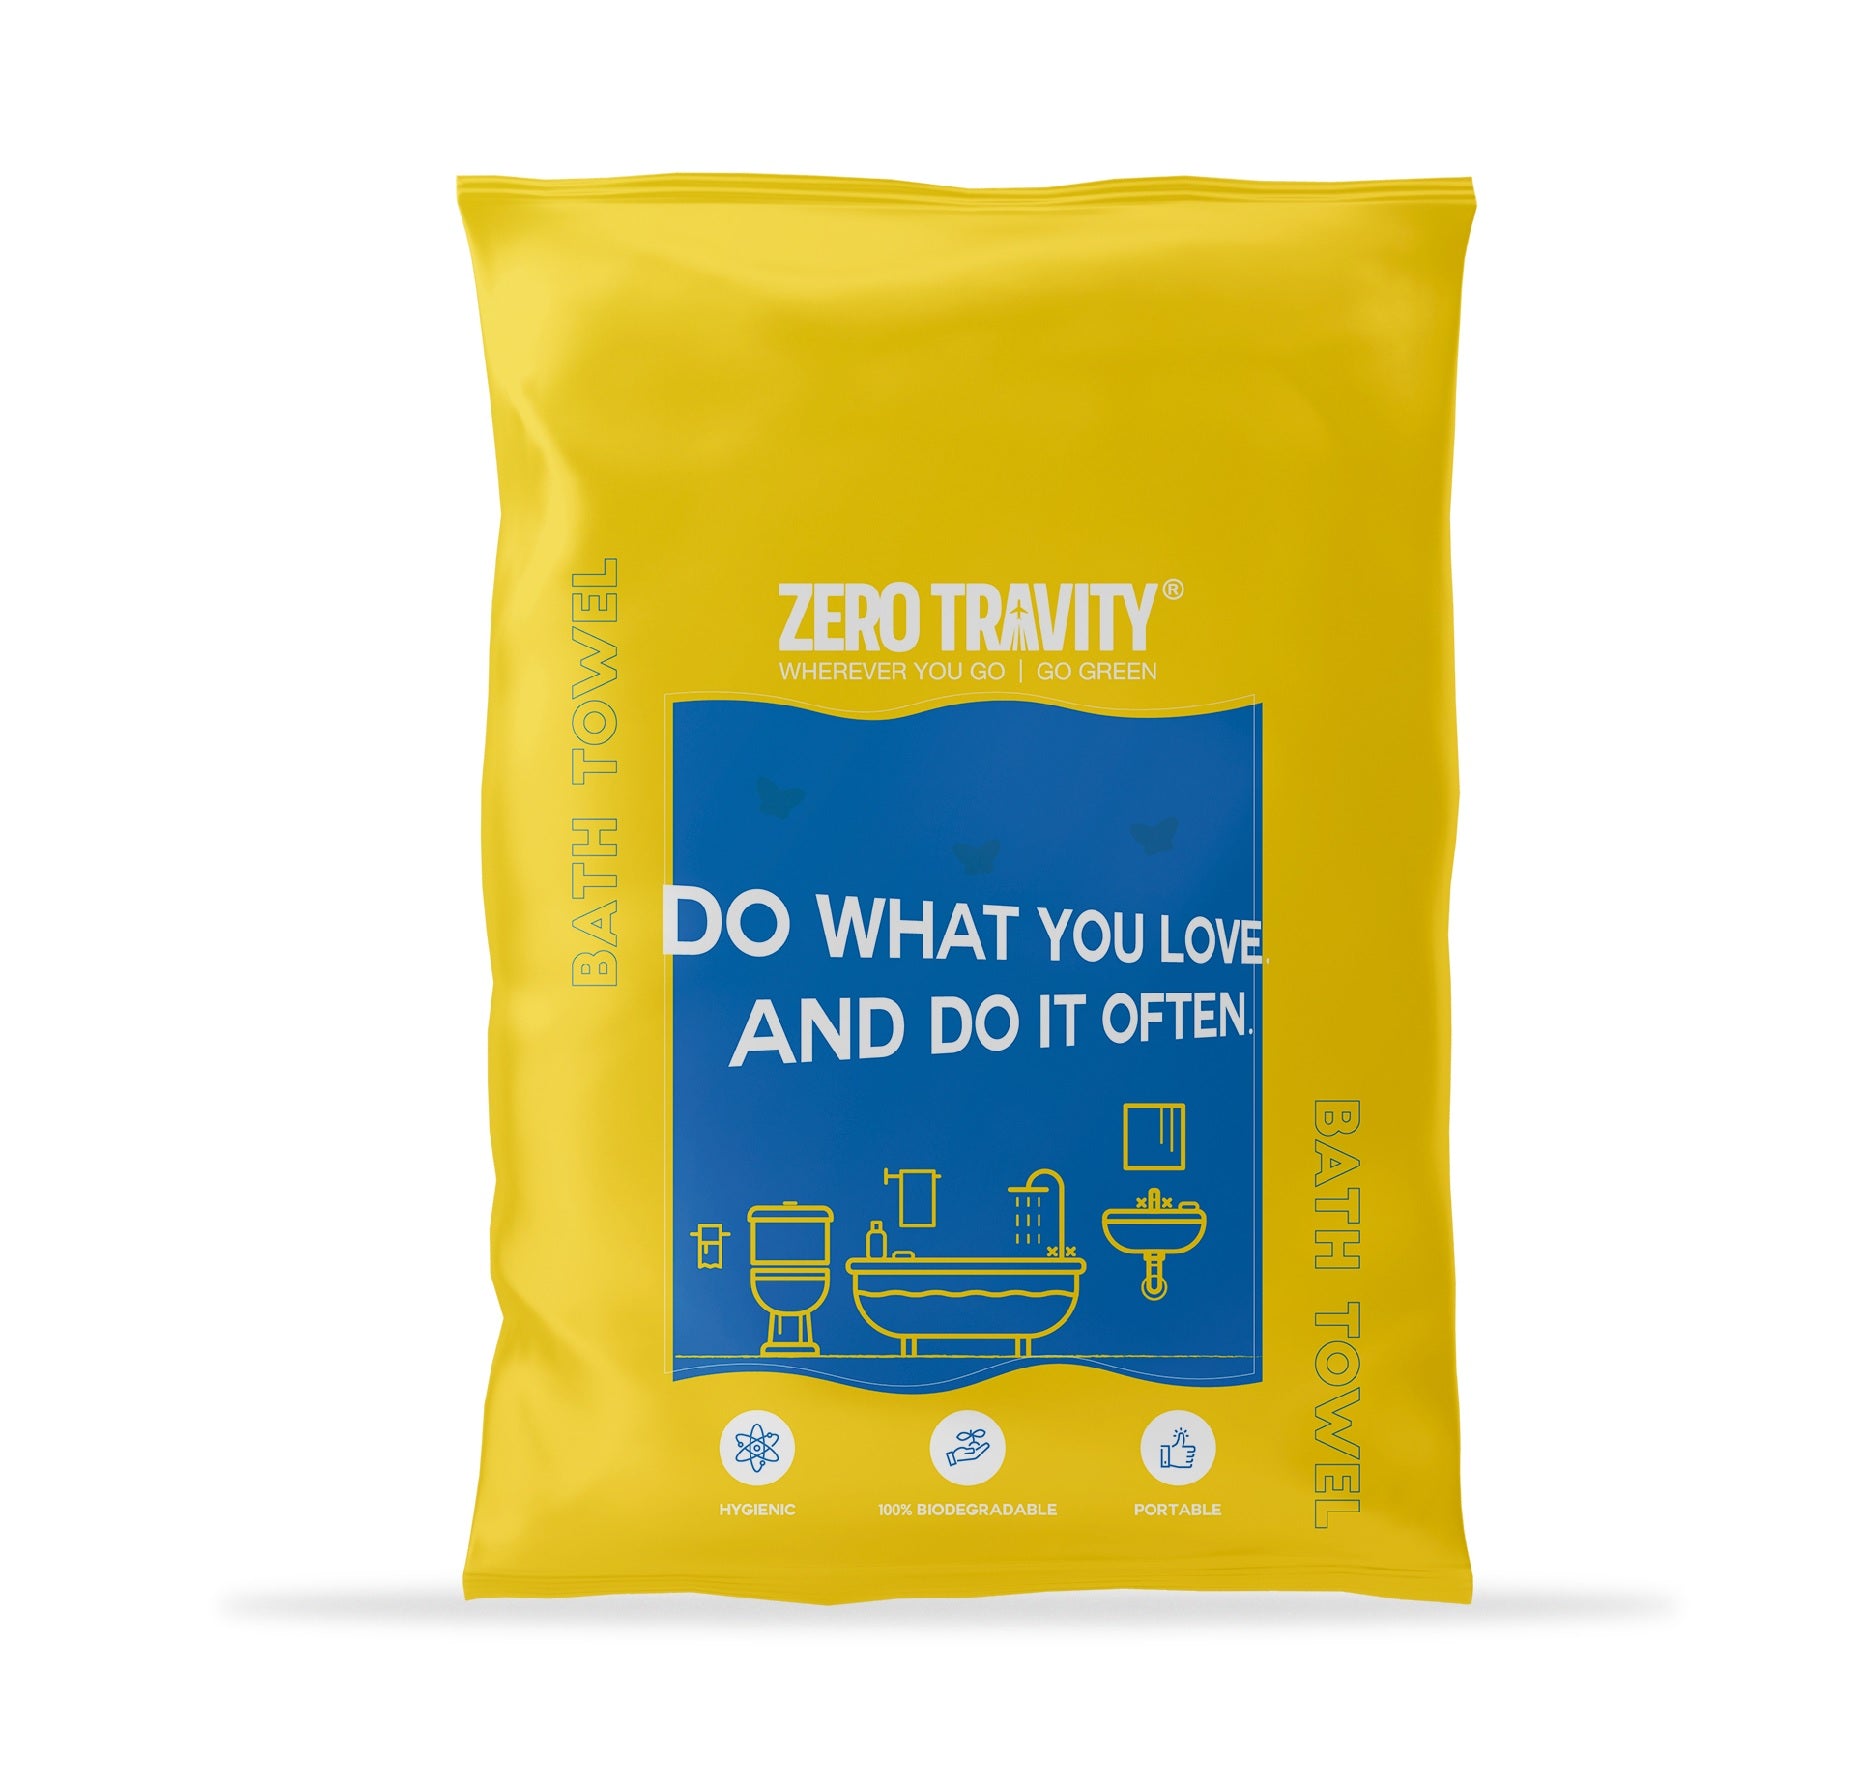 ZERO TRAVITY - 隨行式環保浴巾套裝 (浴巾1個)